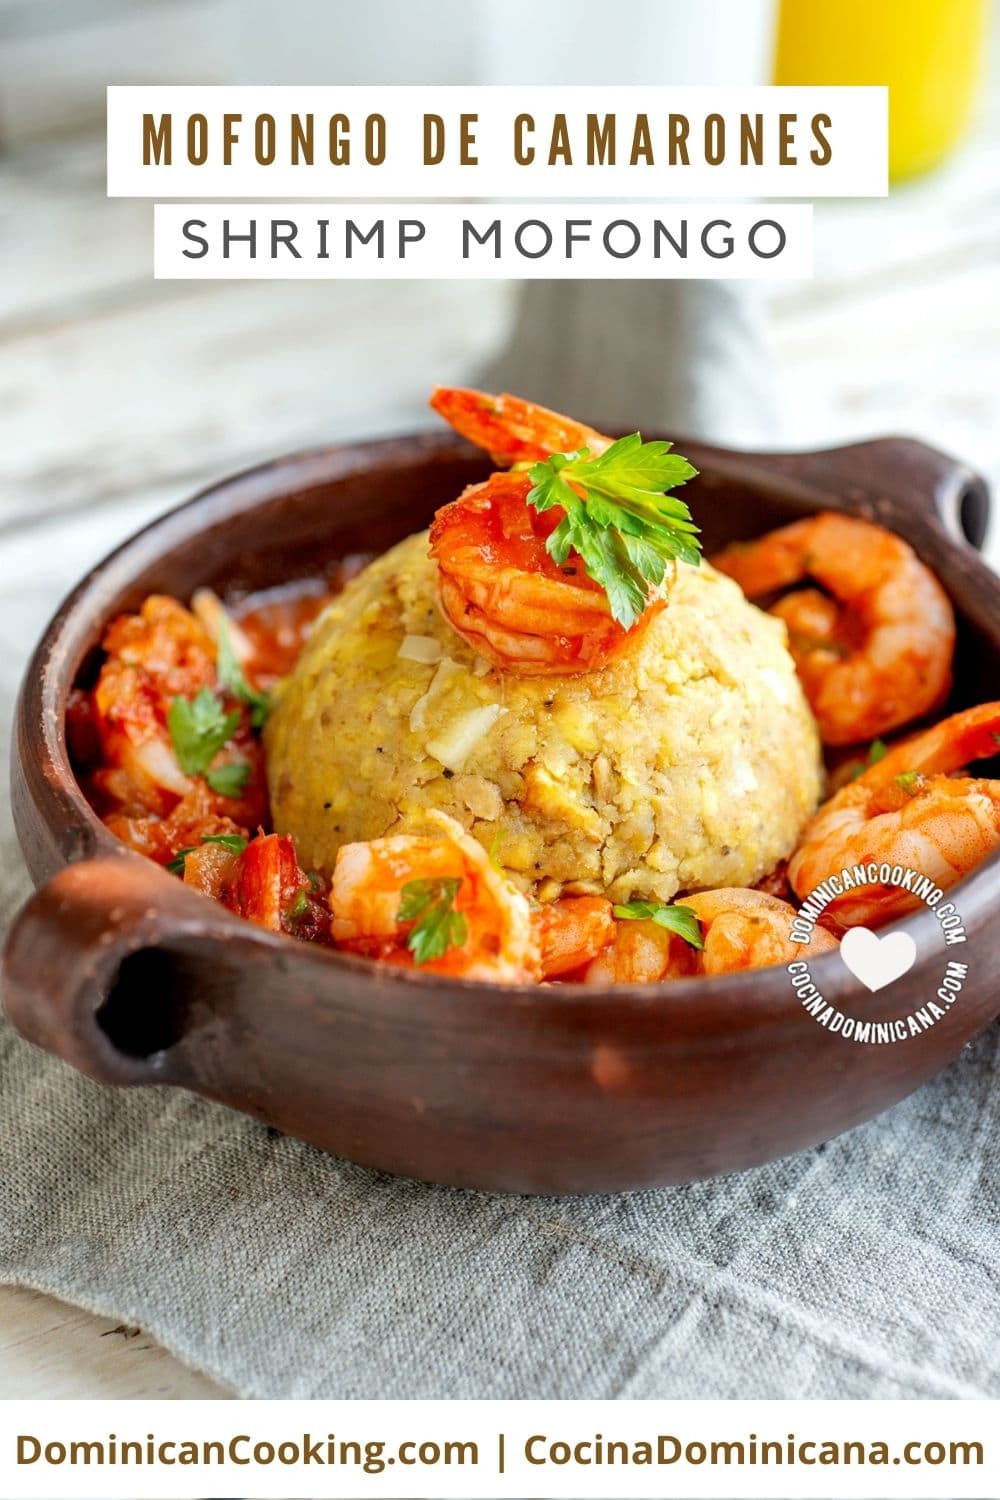 Mofongo de camarones (shrimp mofongo) recipe.